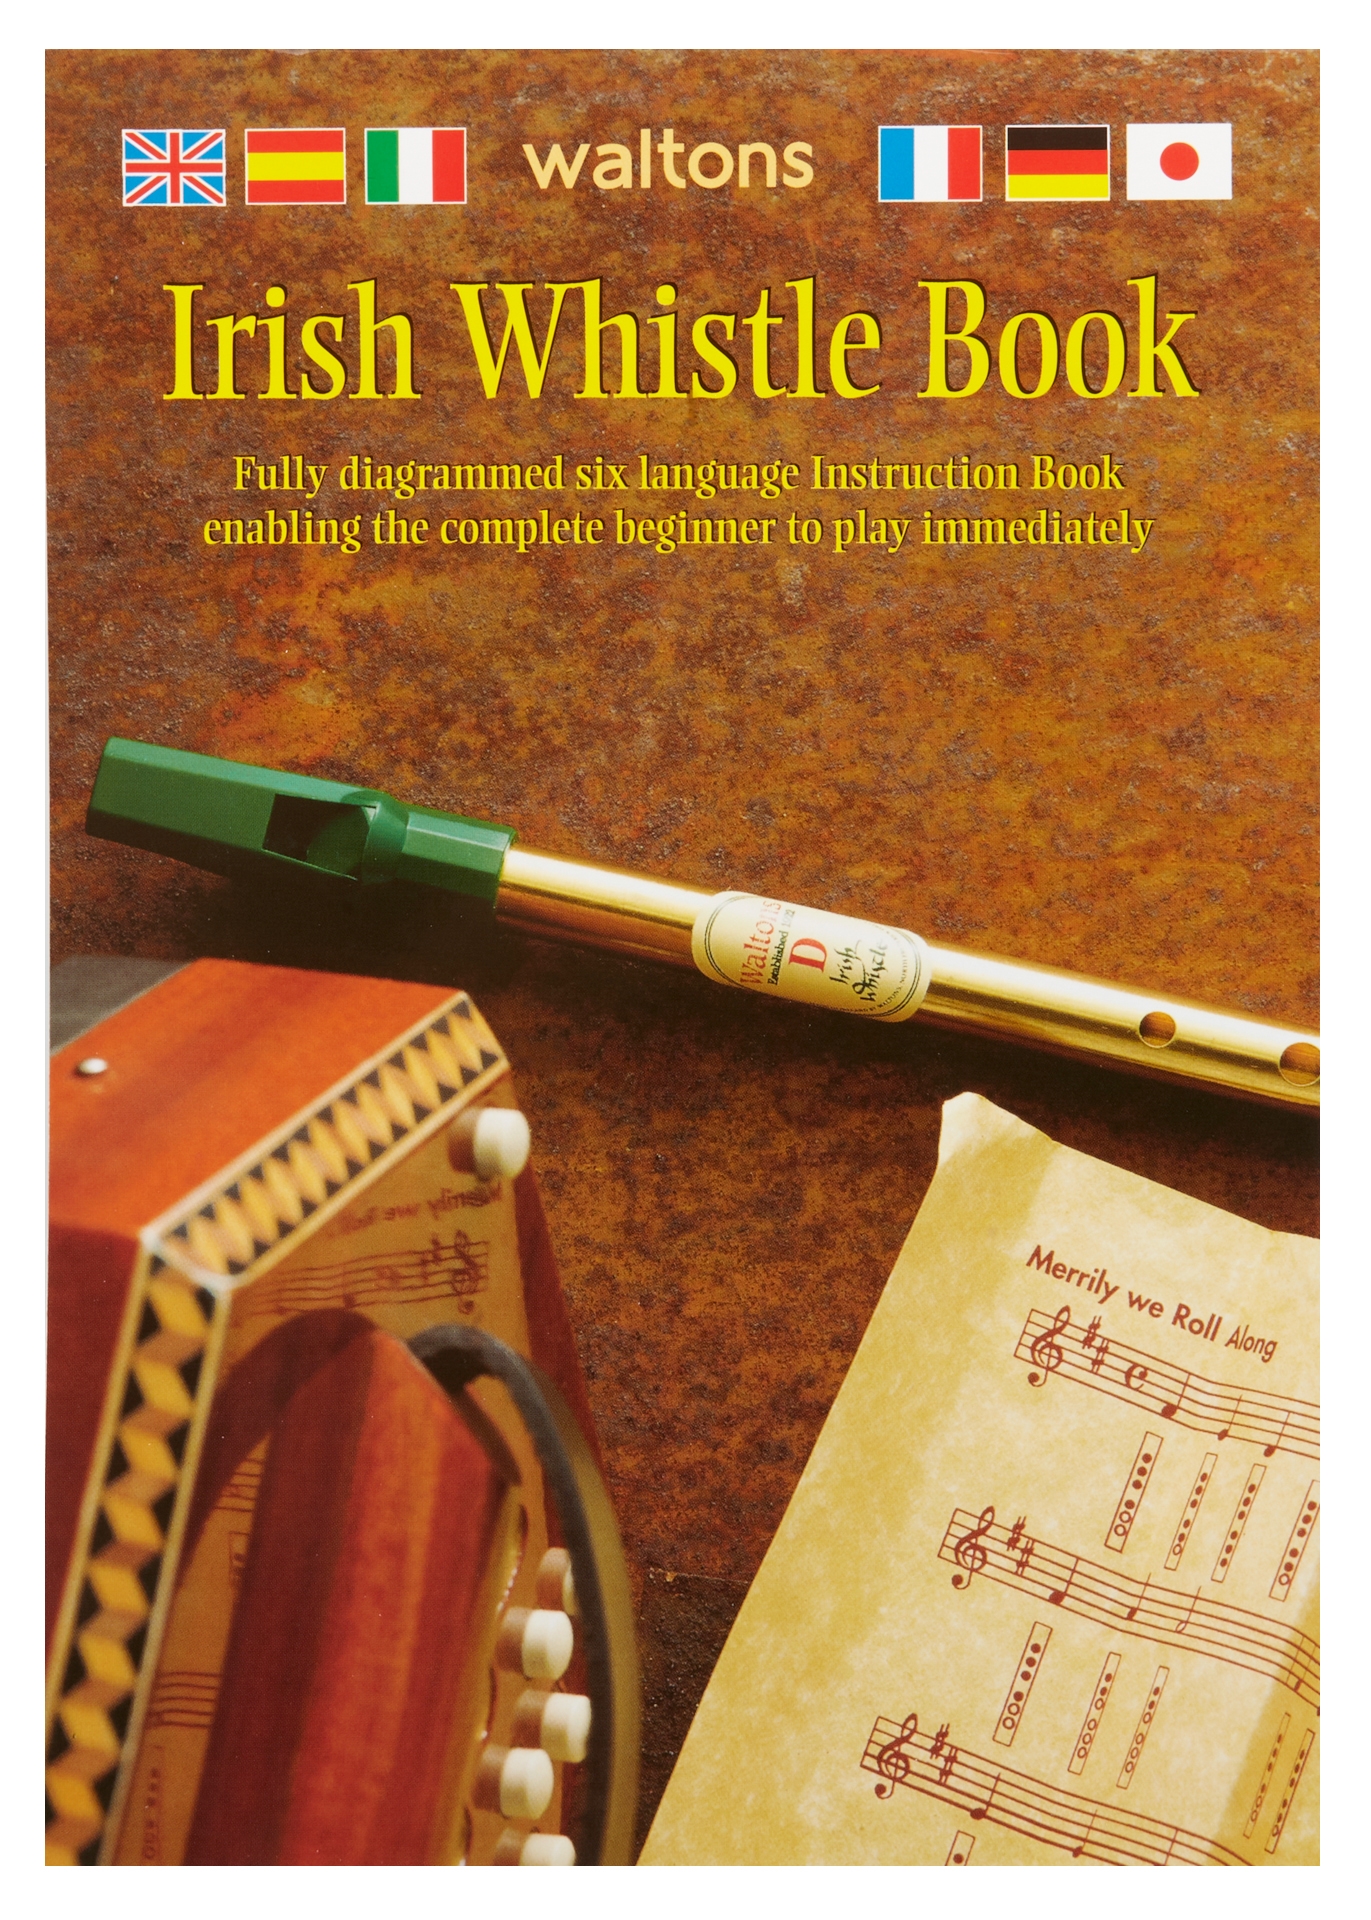 MS Waltons Tin Whistle CD Pack / Irish